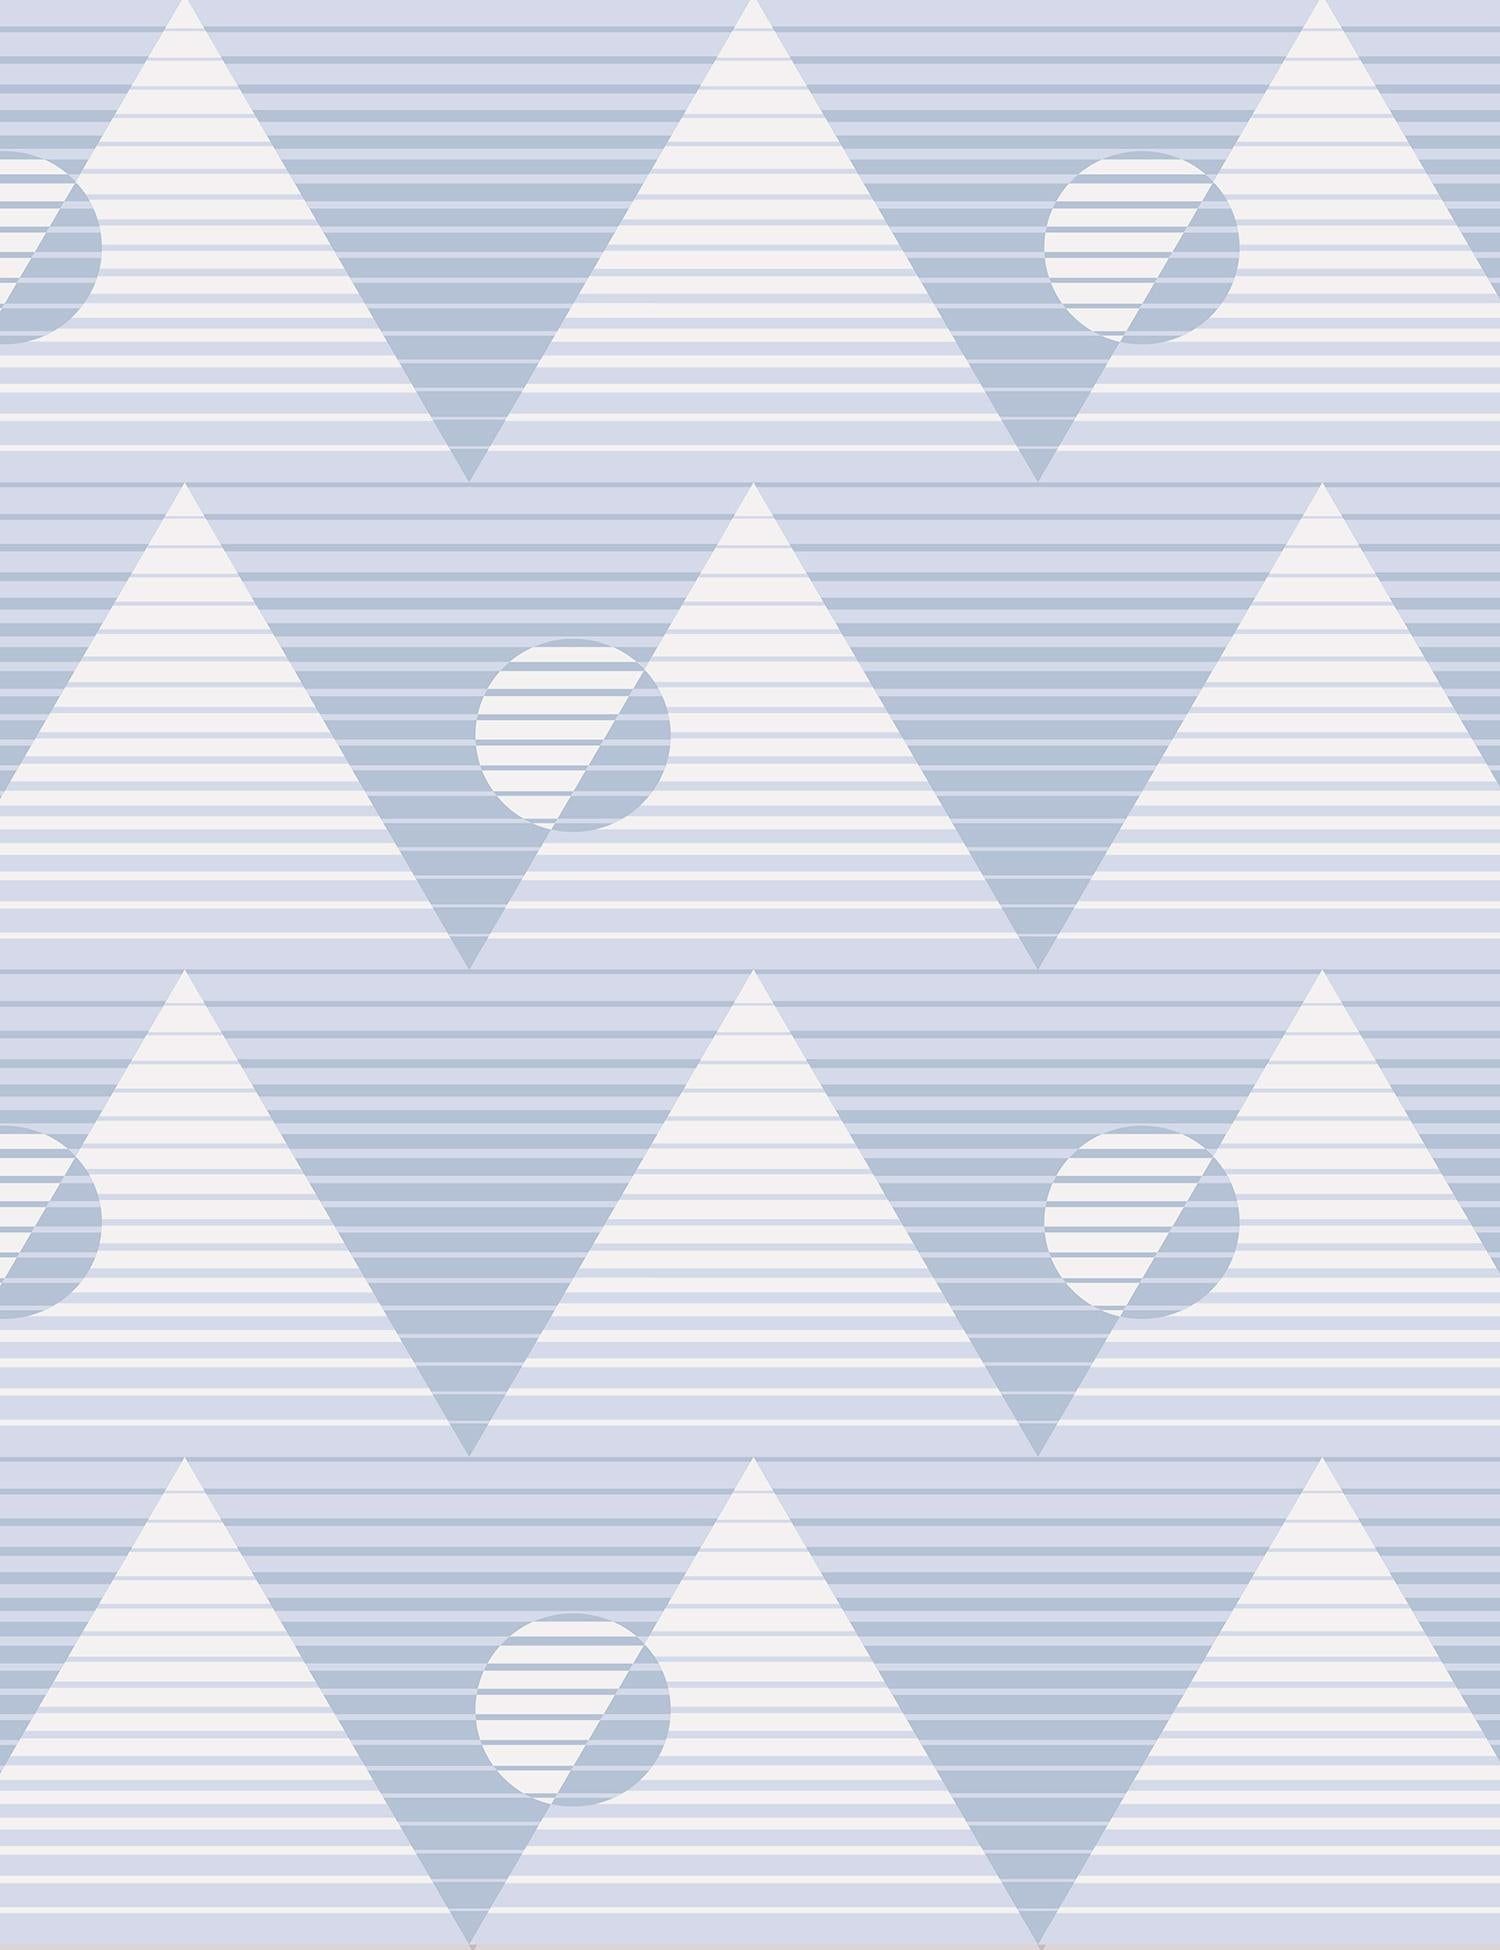 Pyramide du Soleil Designer Wallpaper in Aquifer 'Pale Blue and Periwinkle'